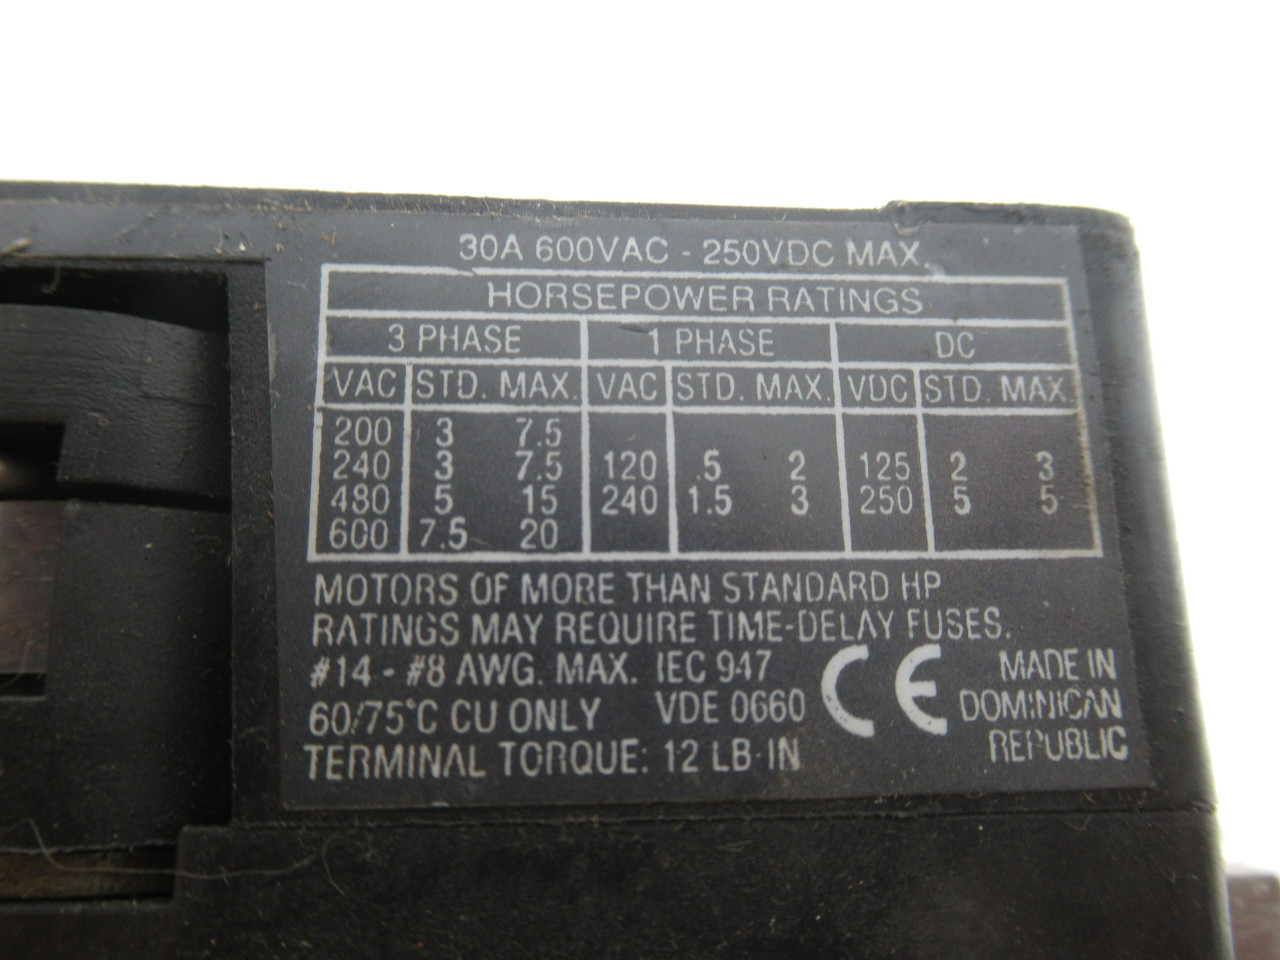 Allen-Bradley 194R-NJ030P3 Disconnect Switch Series B 30A 15 1/4" Shaft USED